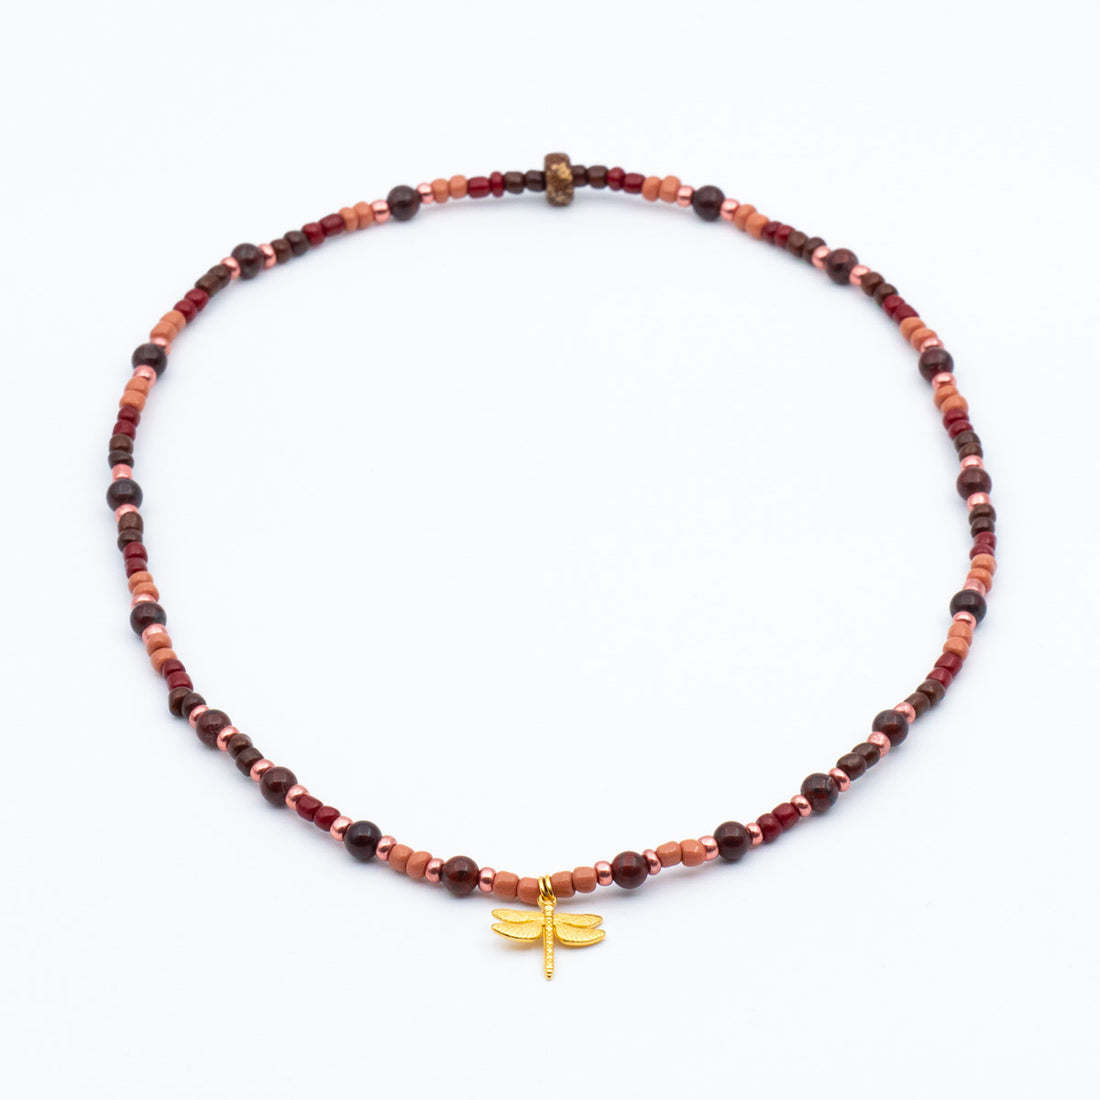 Necklace - Jasper healing stone